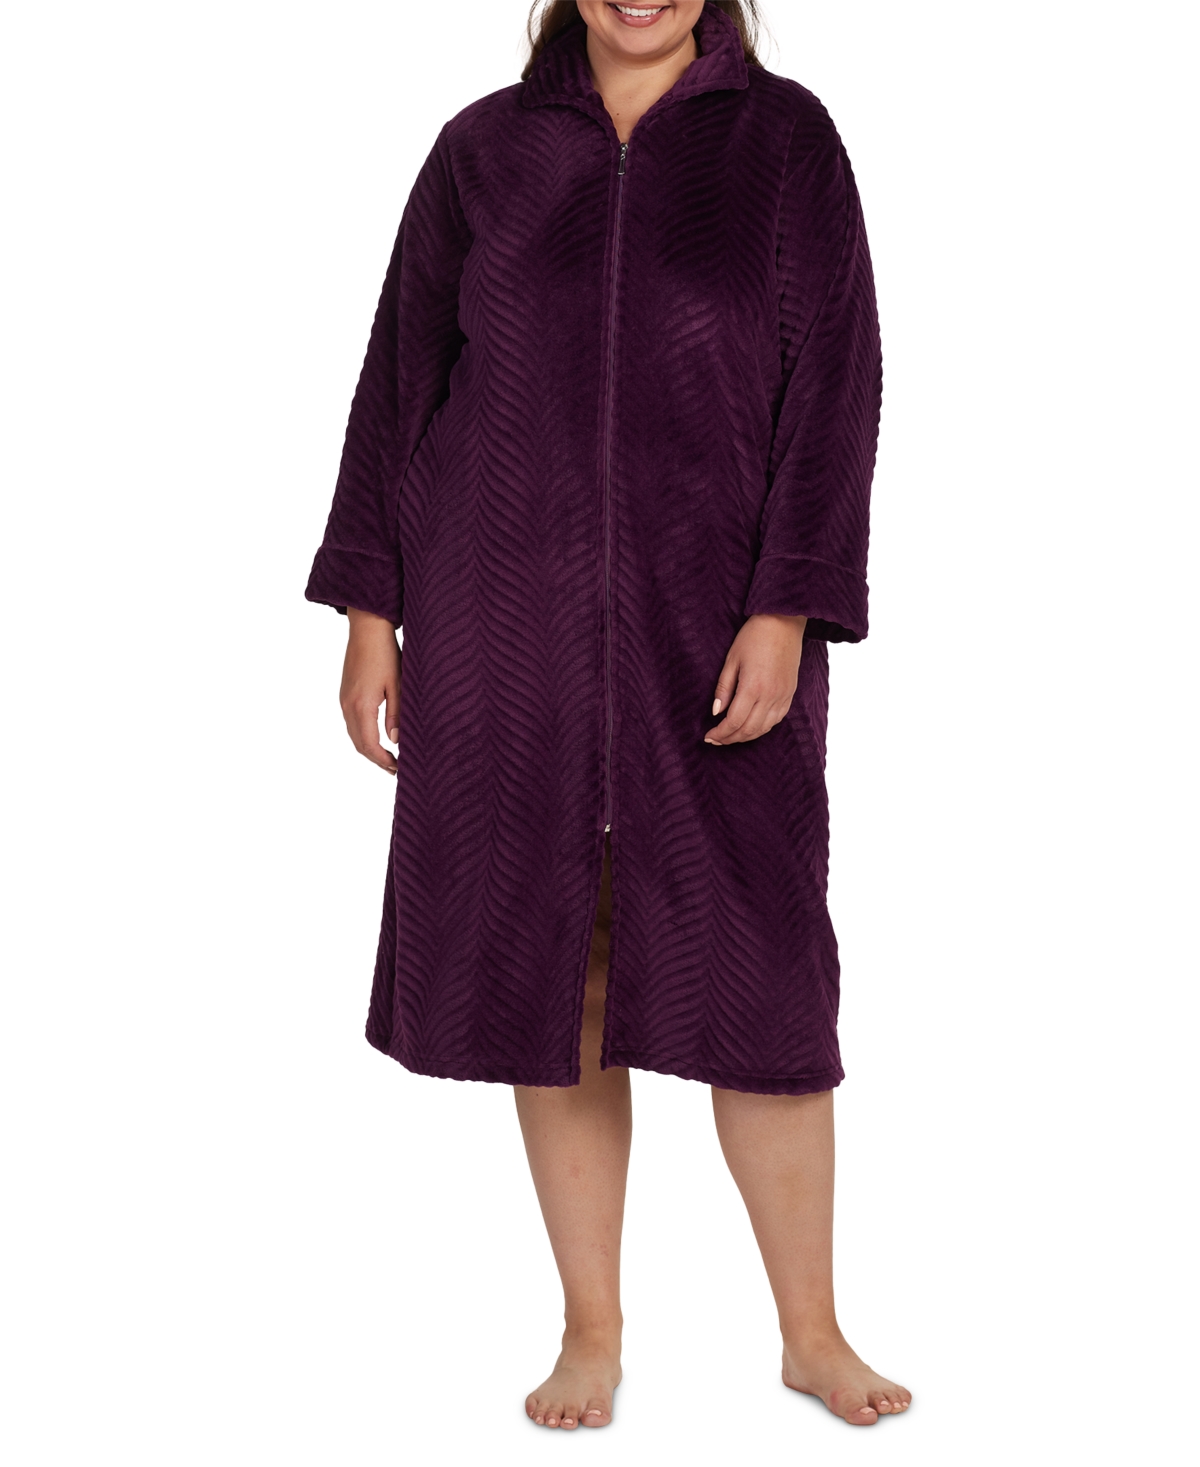 Plus Size Solid Long-Sleeve Zip Robe - Aubergine